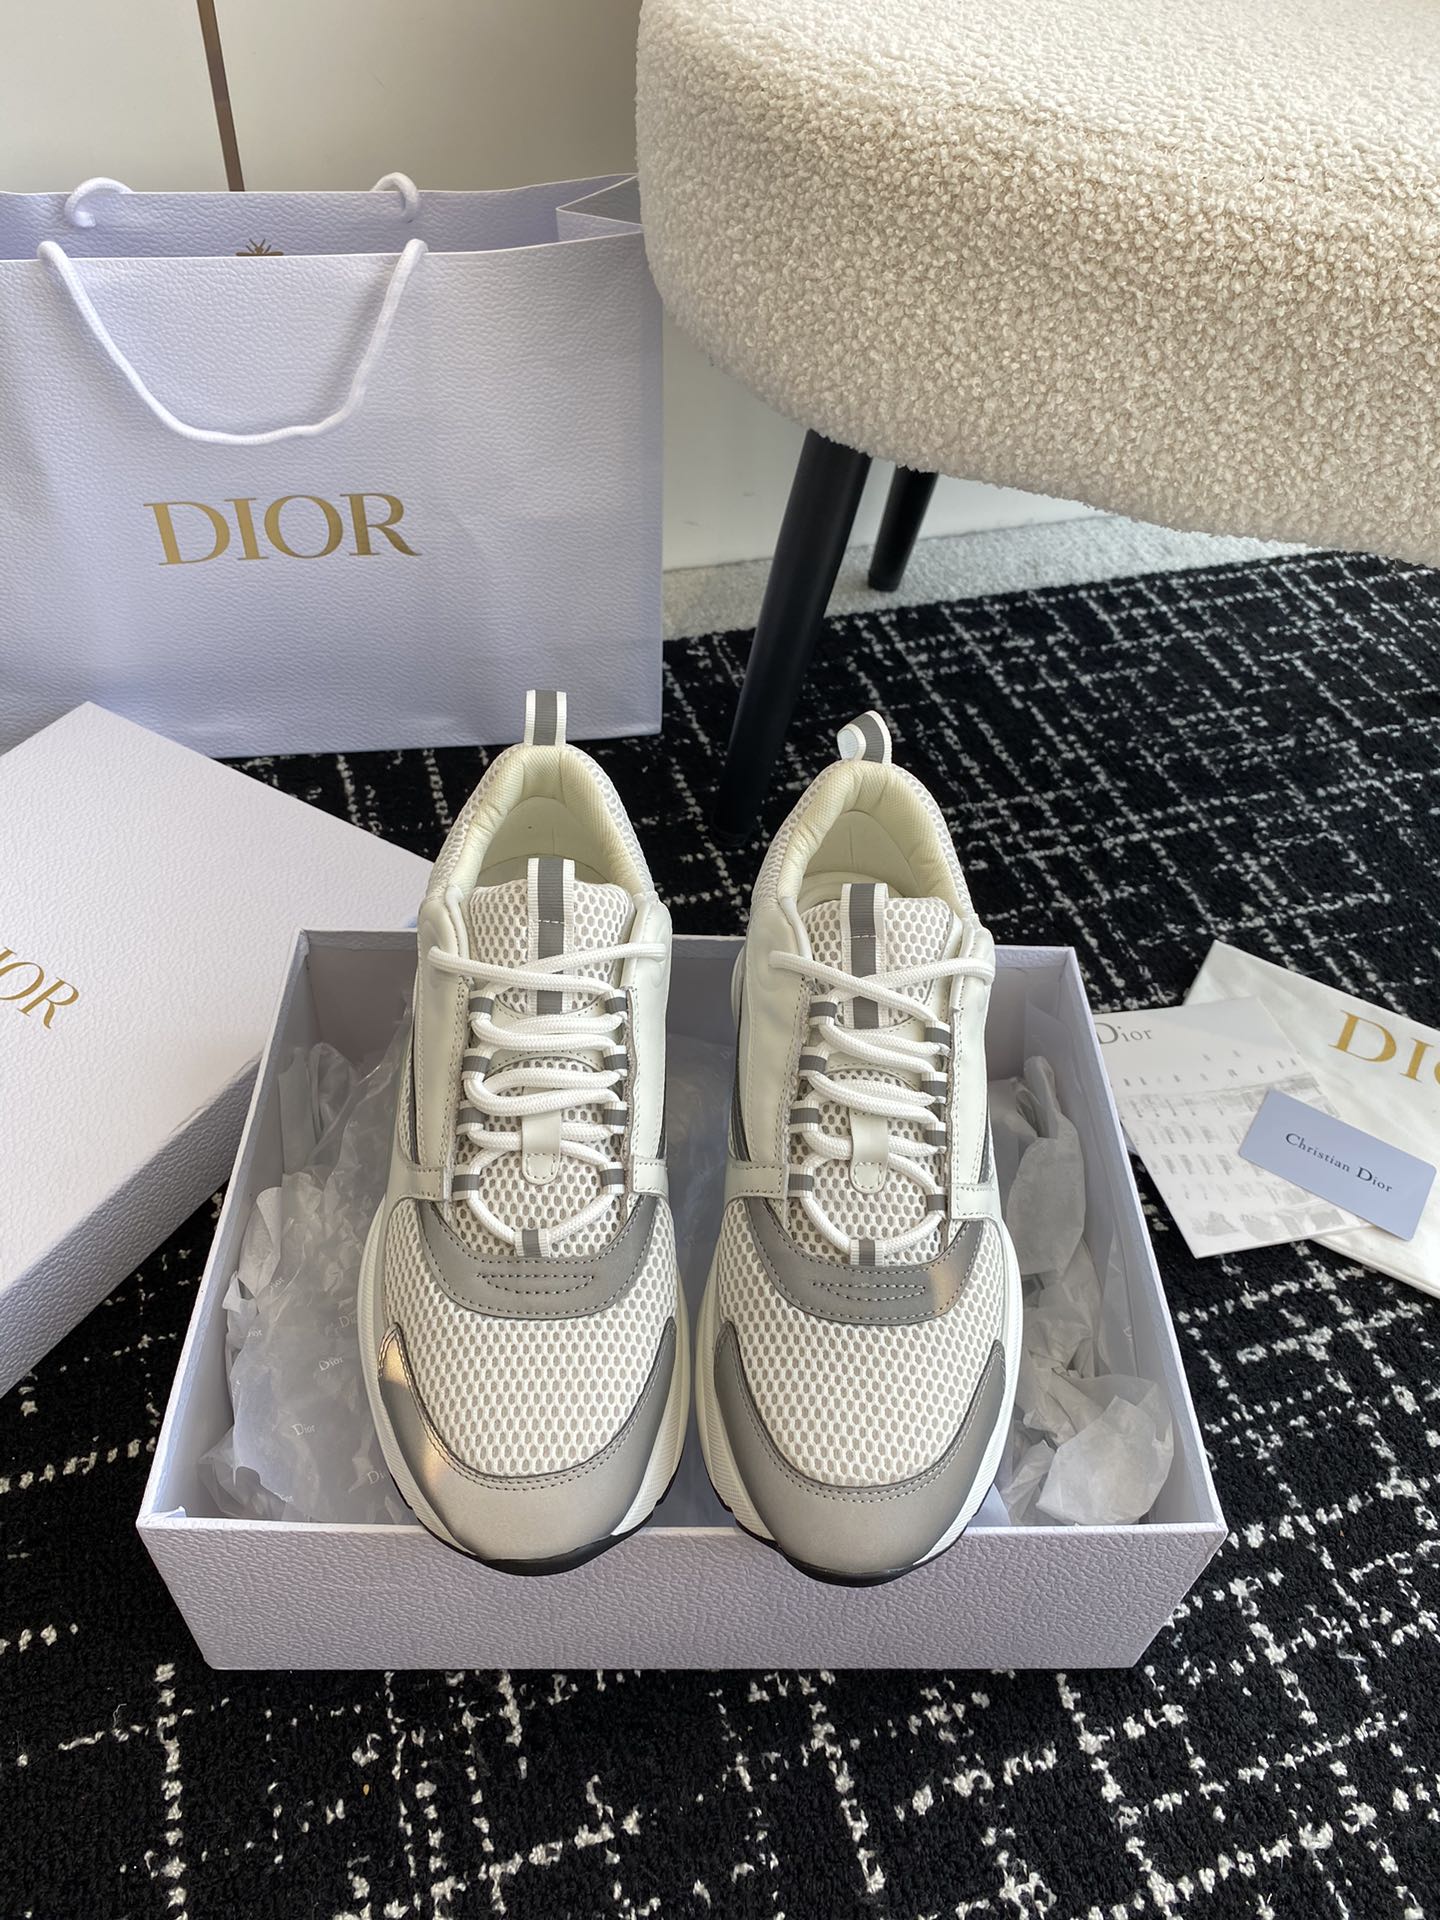 Dior 7 Star
 Shoes Sneakers Splicing Unisex Women Men Rubber Fashion Casual